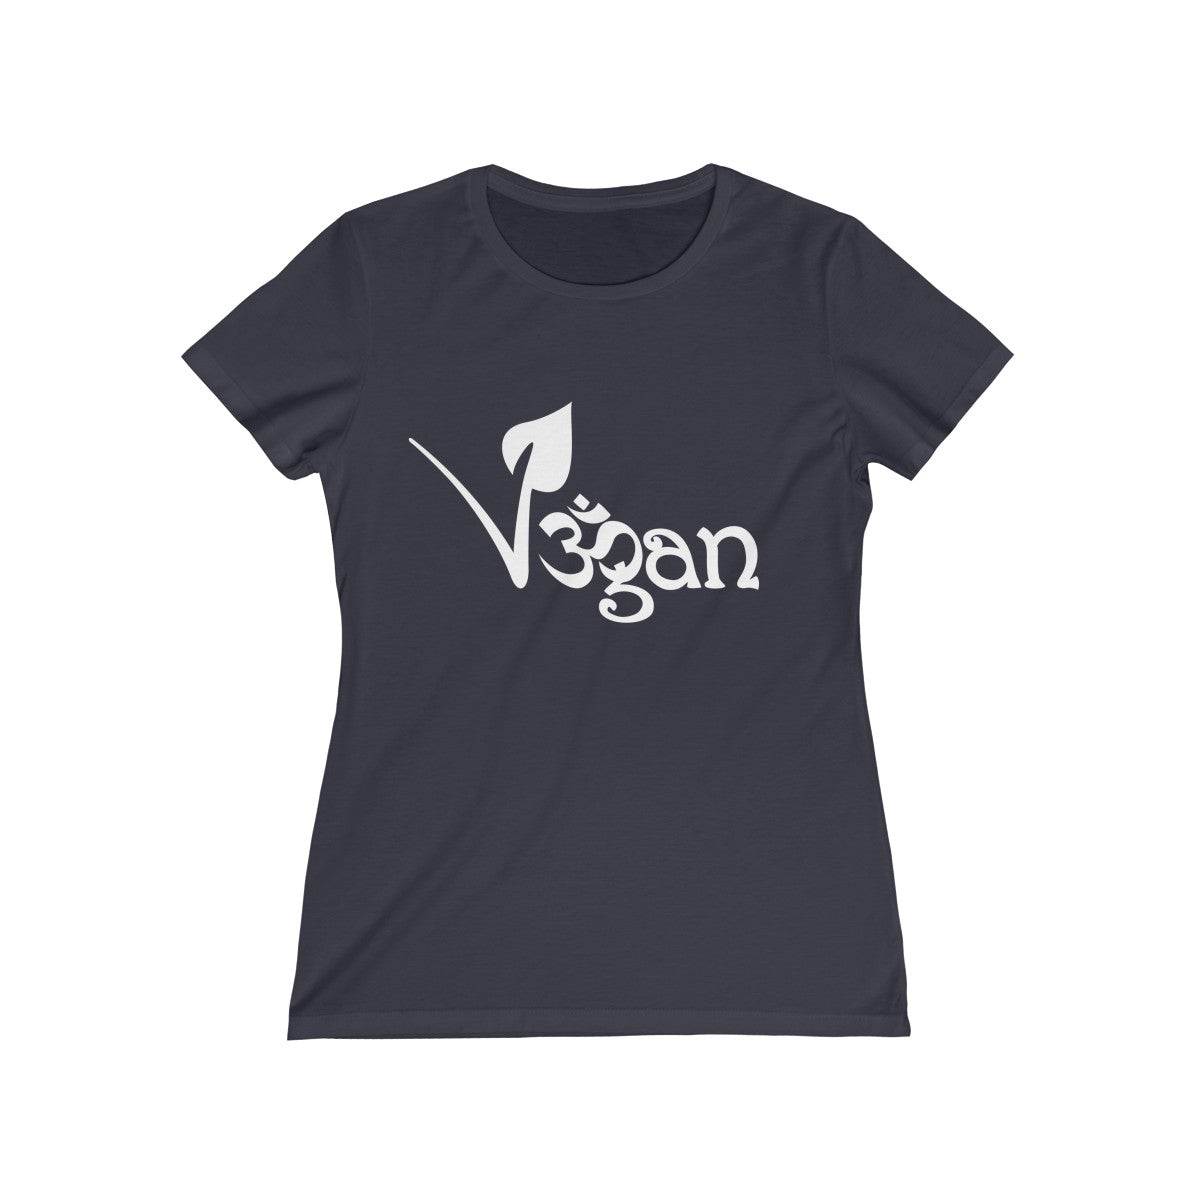 Vegan - Women's Missy Tee